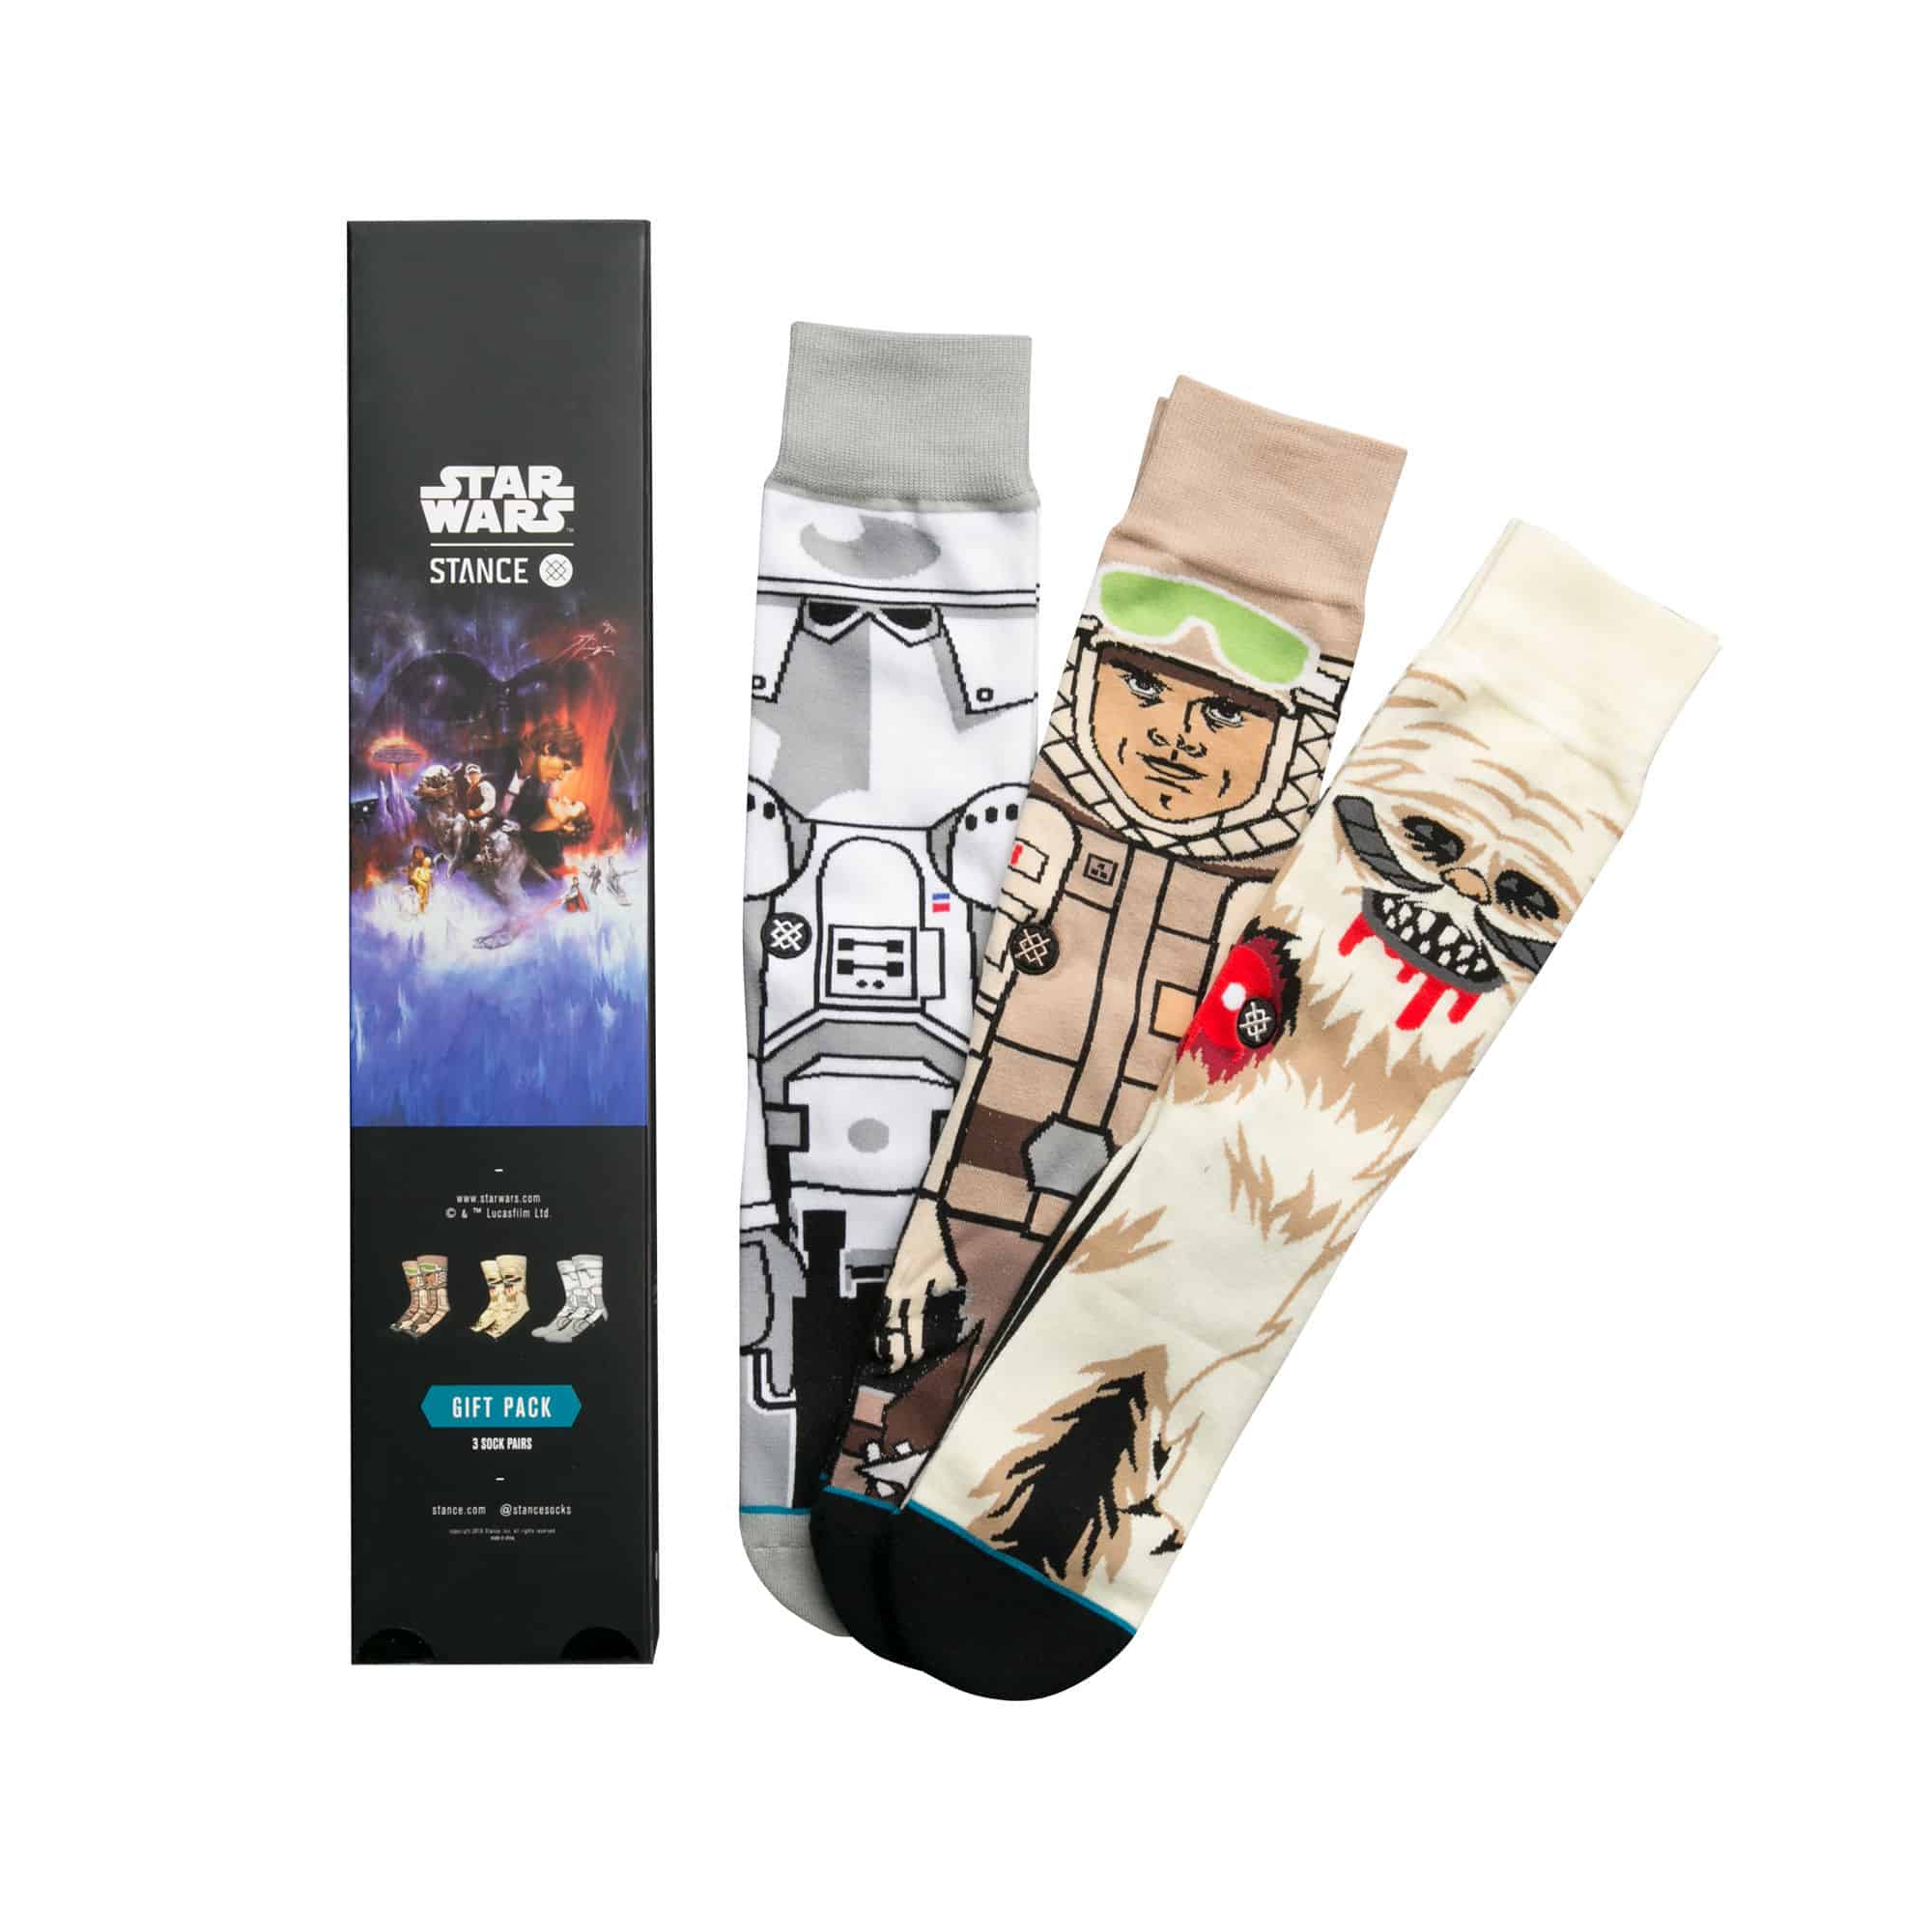 I love you Fandom Death star and back Socks Star Wars sock comfortable cotton